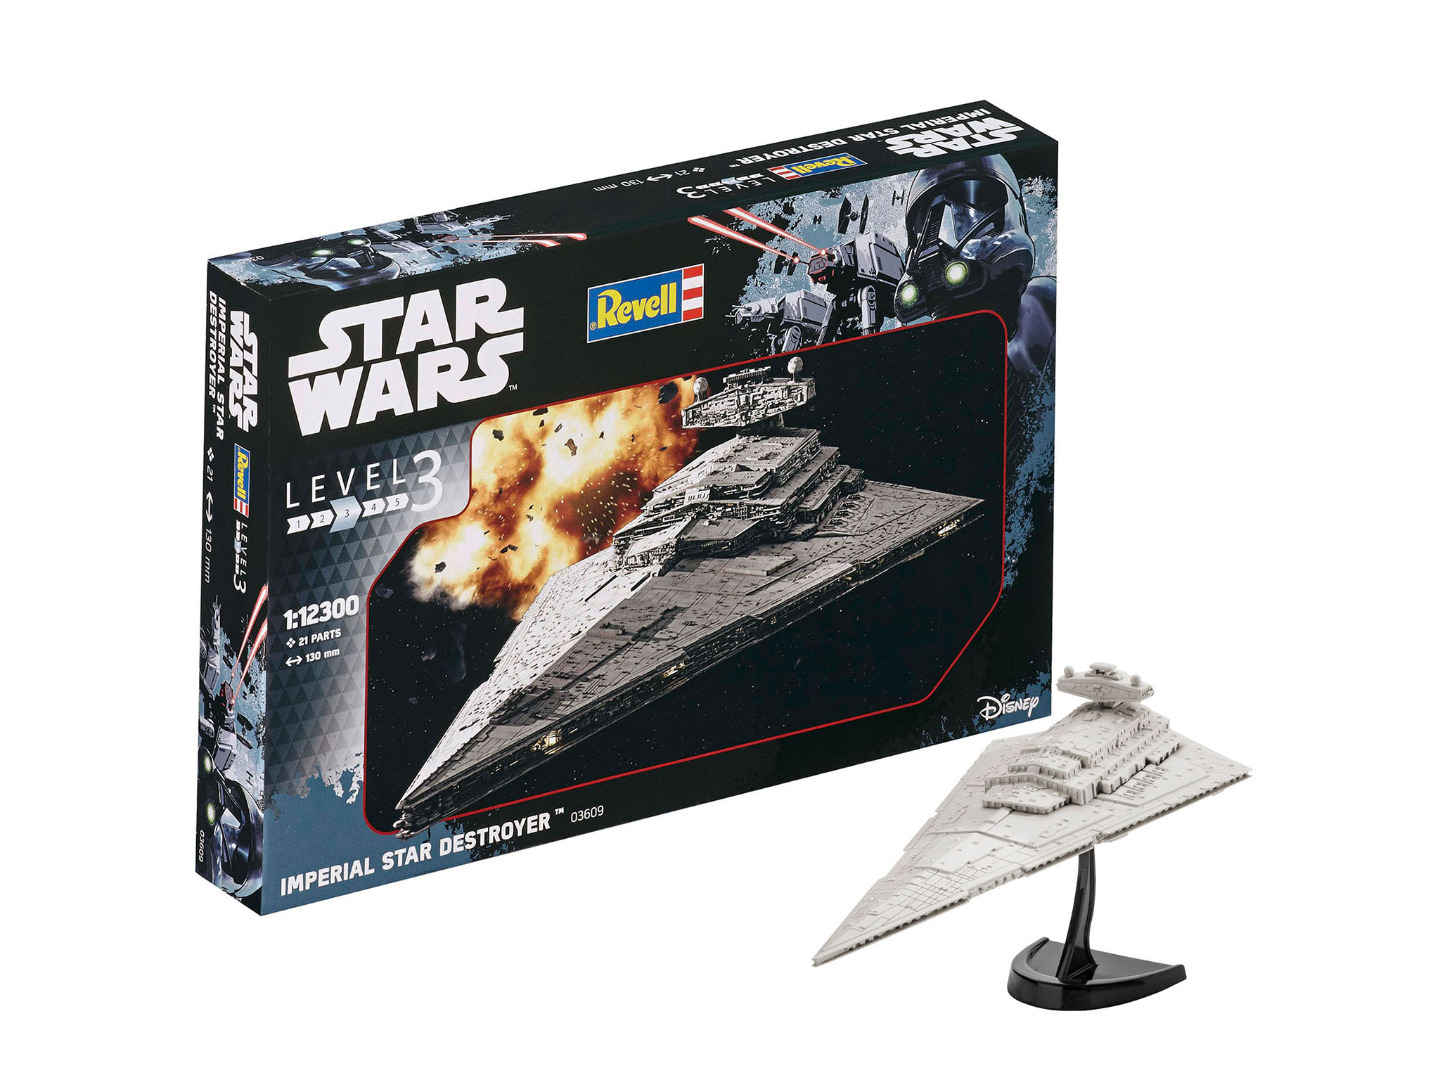 Revell Model Kit Star Wars Imperial Star Destroyer Scale: 1:12300 